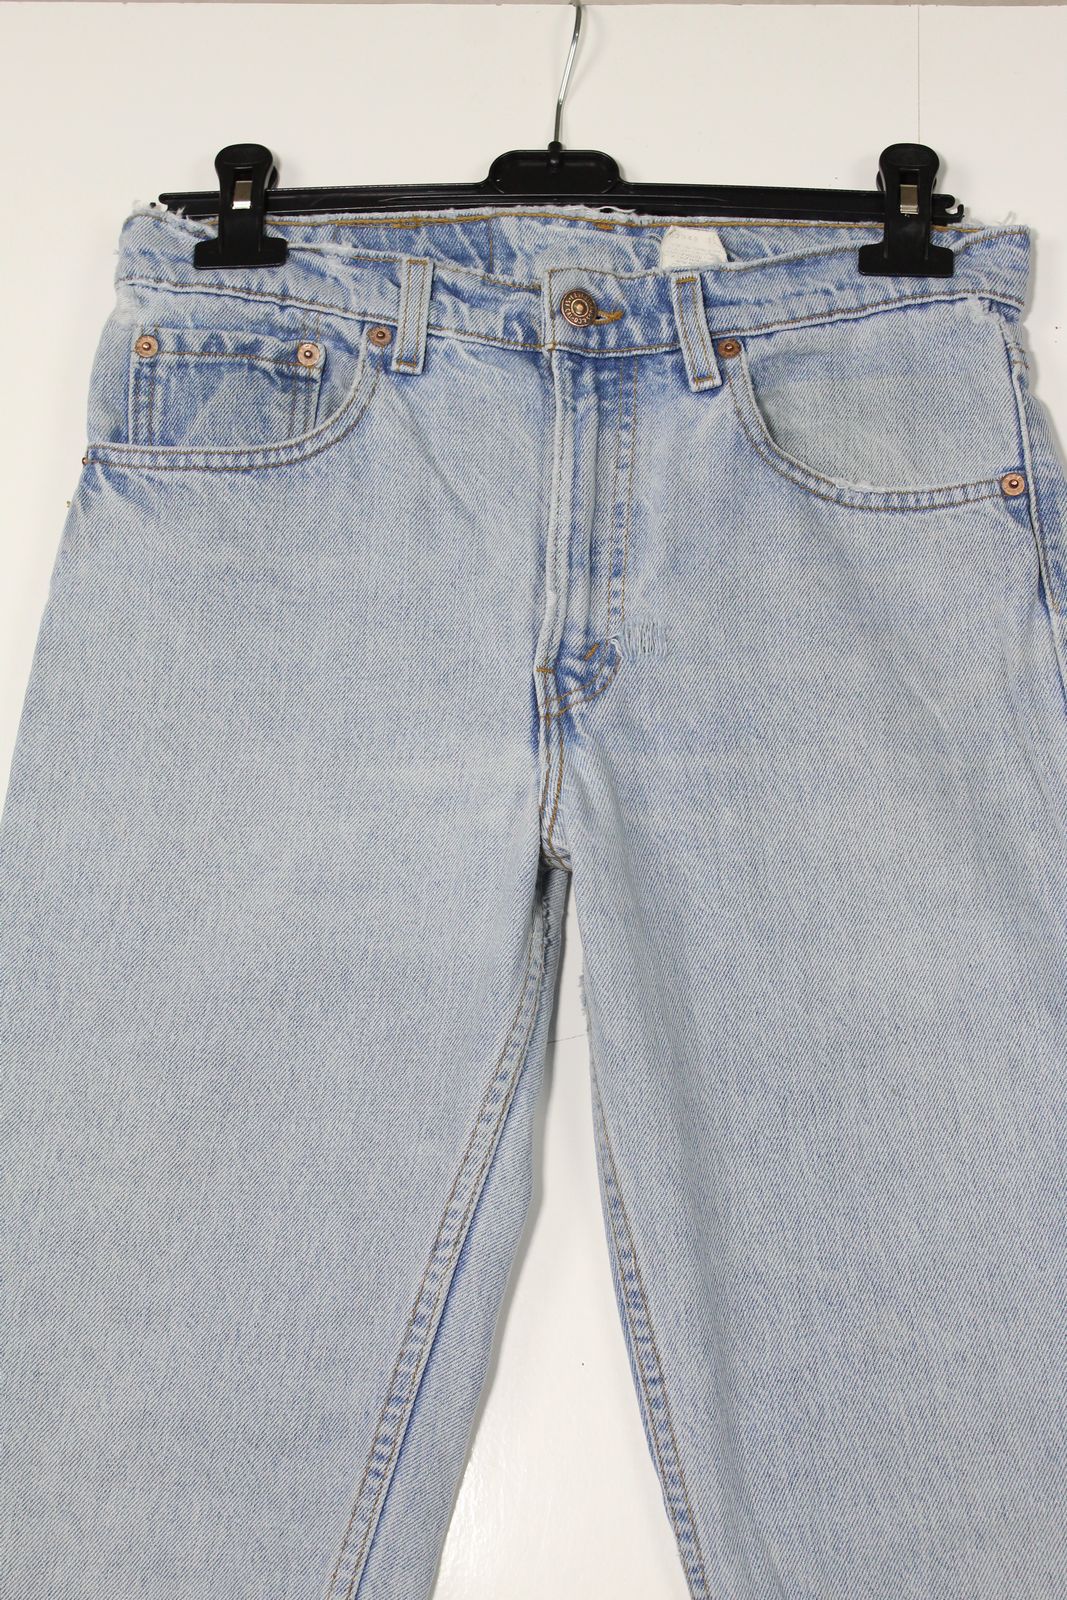 Levi's 512 Slim Fit Denim W32 L34 Made In USA Jeans Vintage